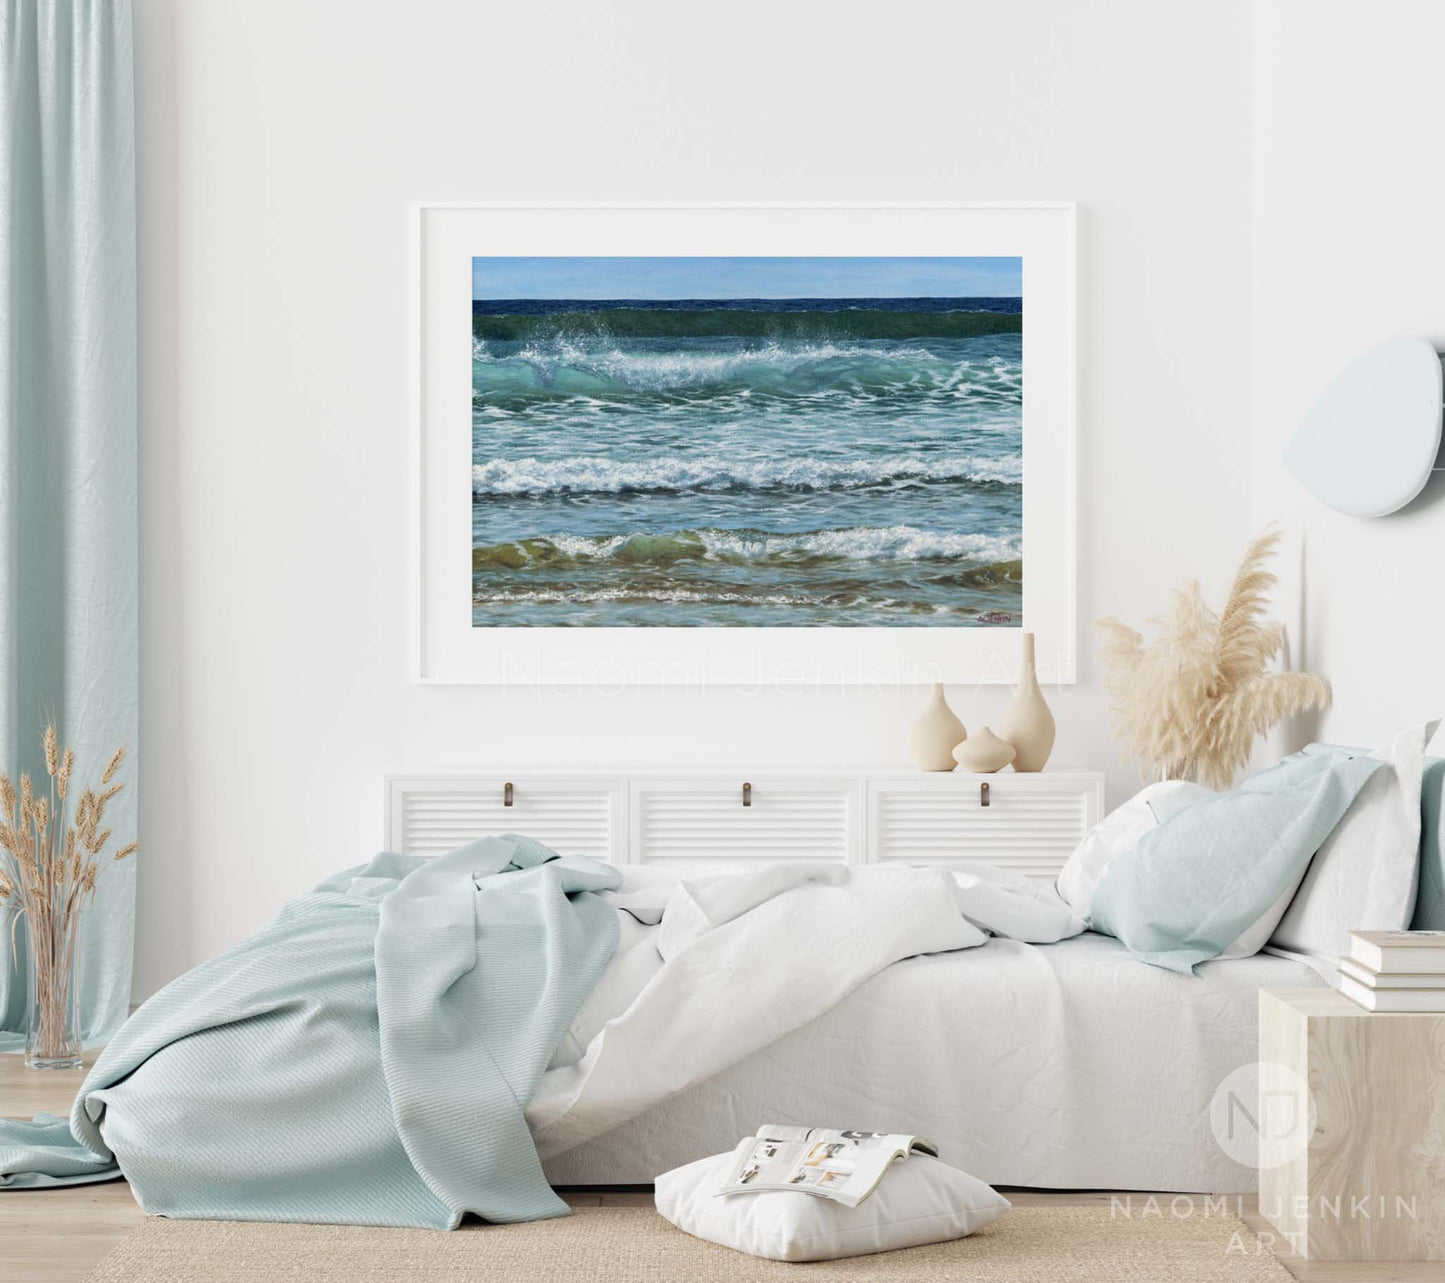 Framed seascape print 'Summer Surf' by seascape artist Naomi Jenkin Art in a bedroom setting.